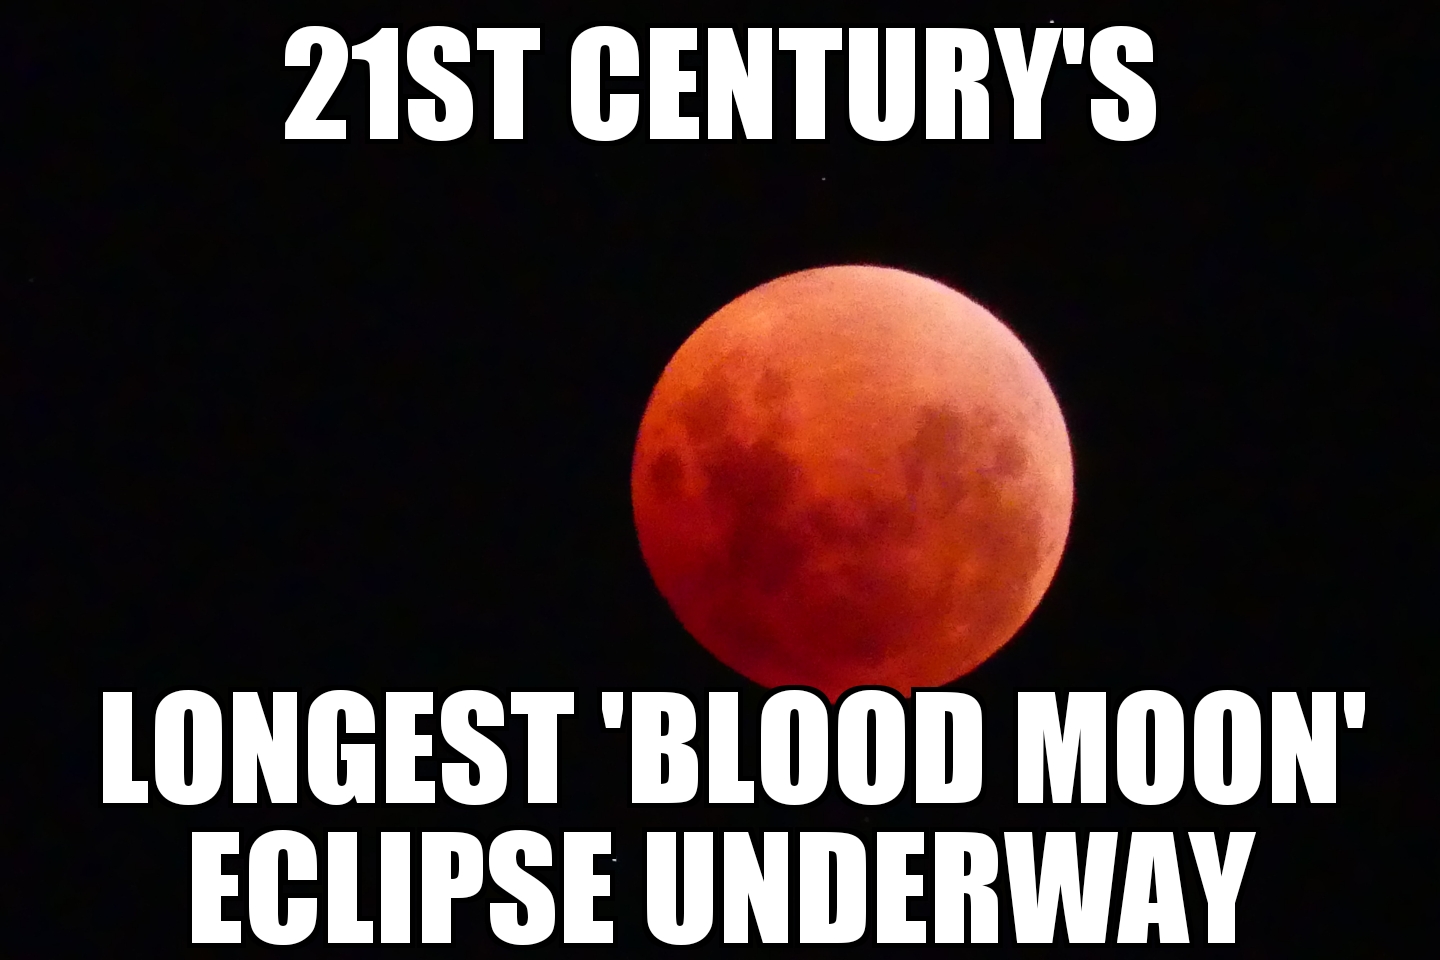 ‘Blood moon’ eclipse